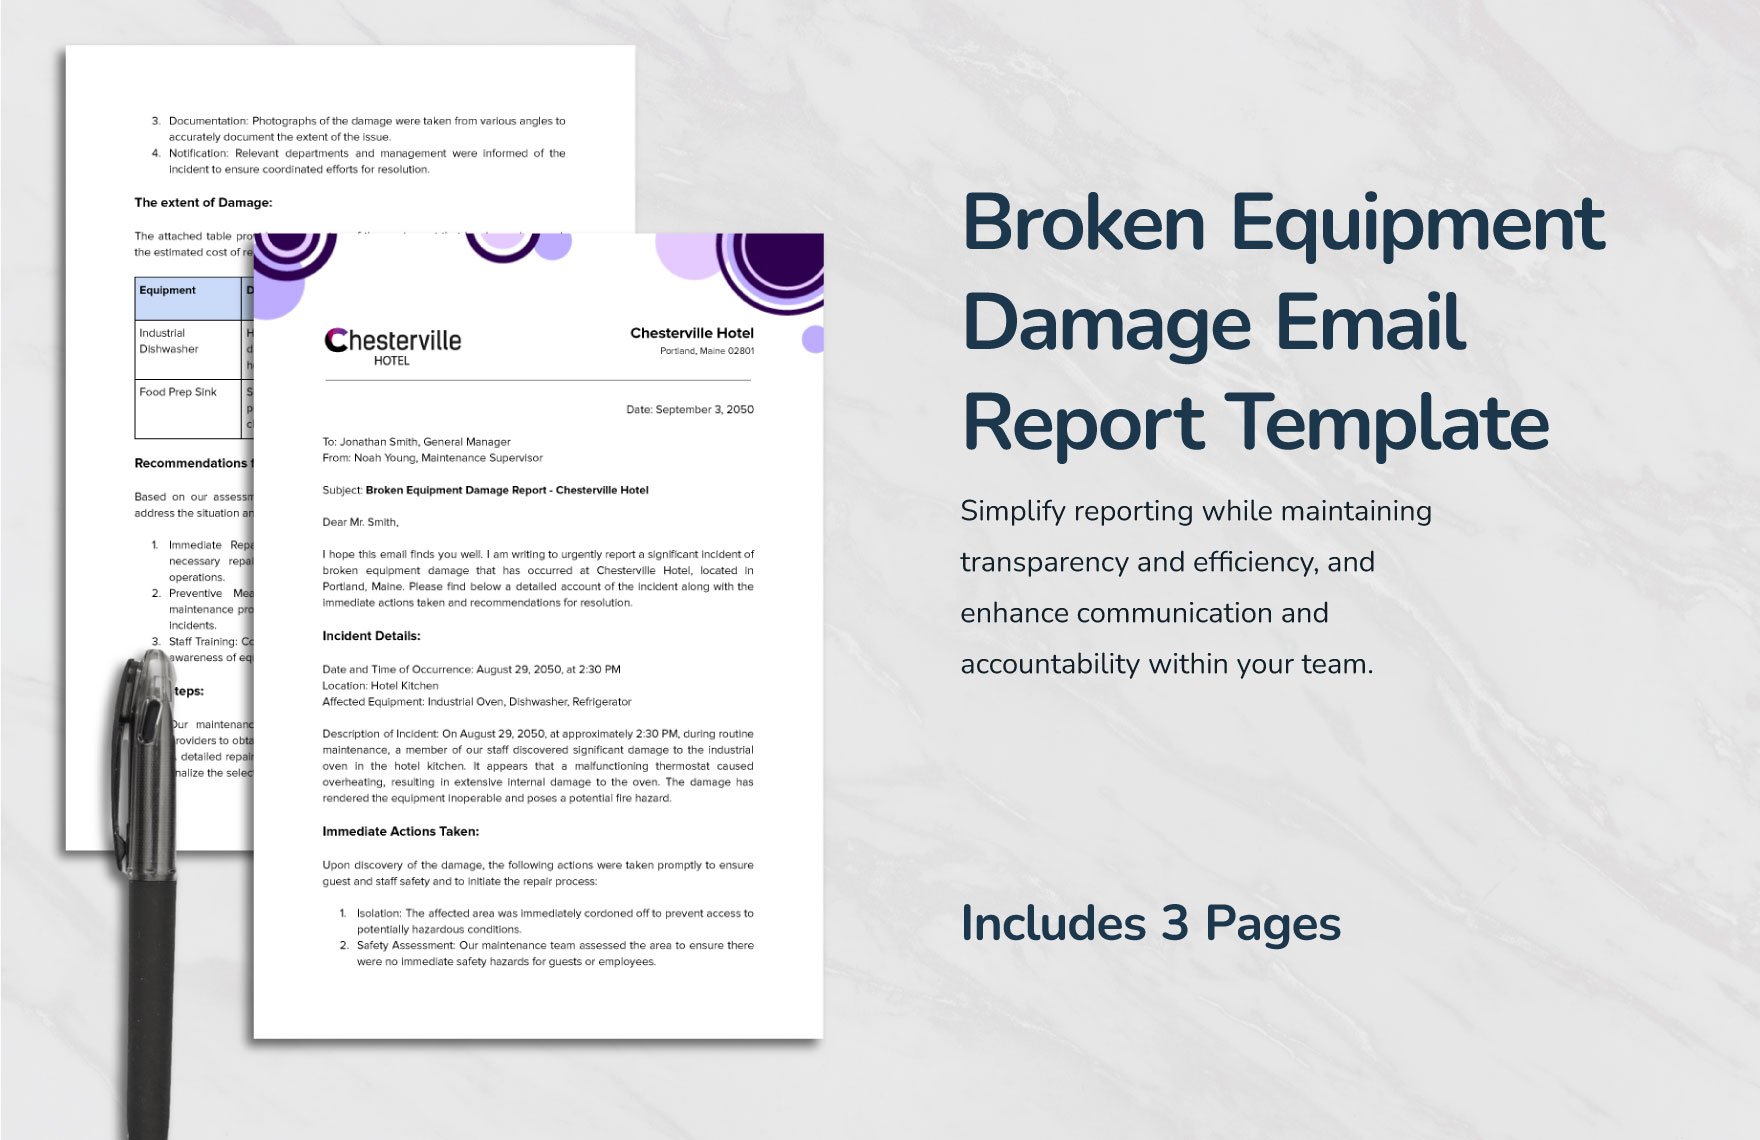 Broken Equipment Damage Email Report Template